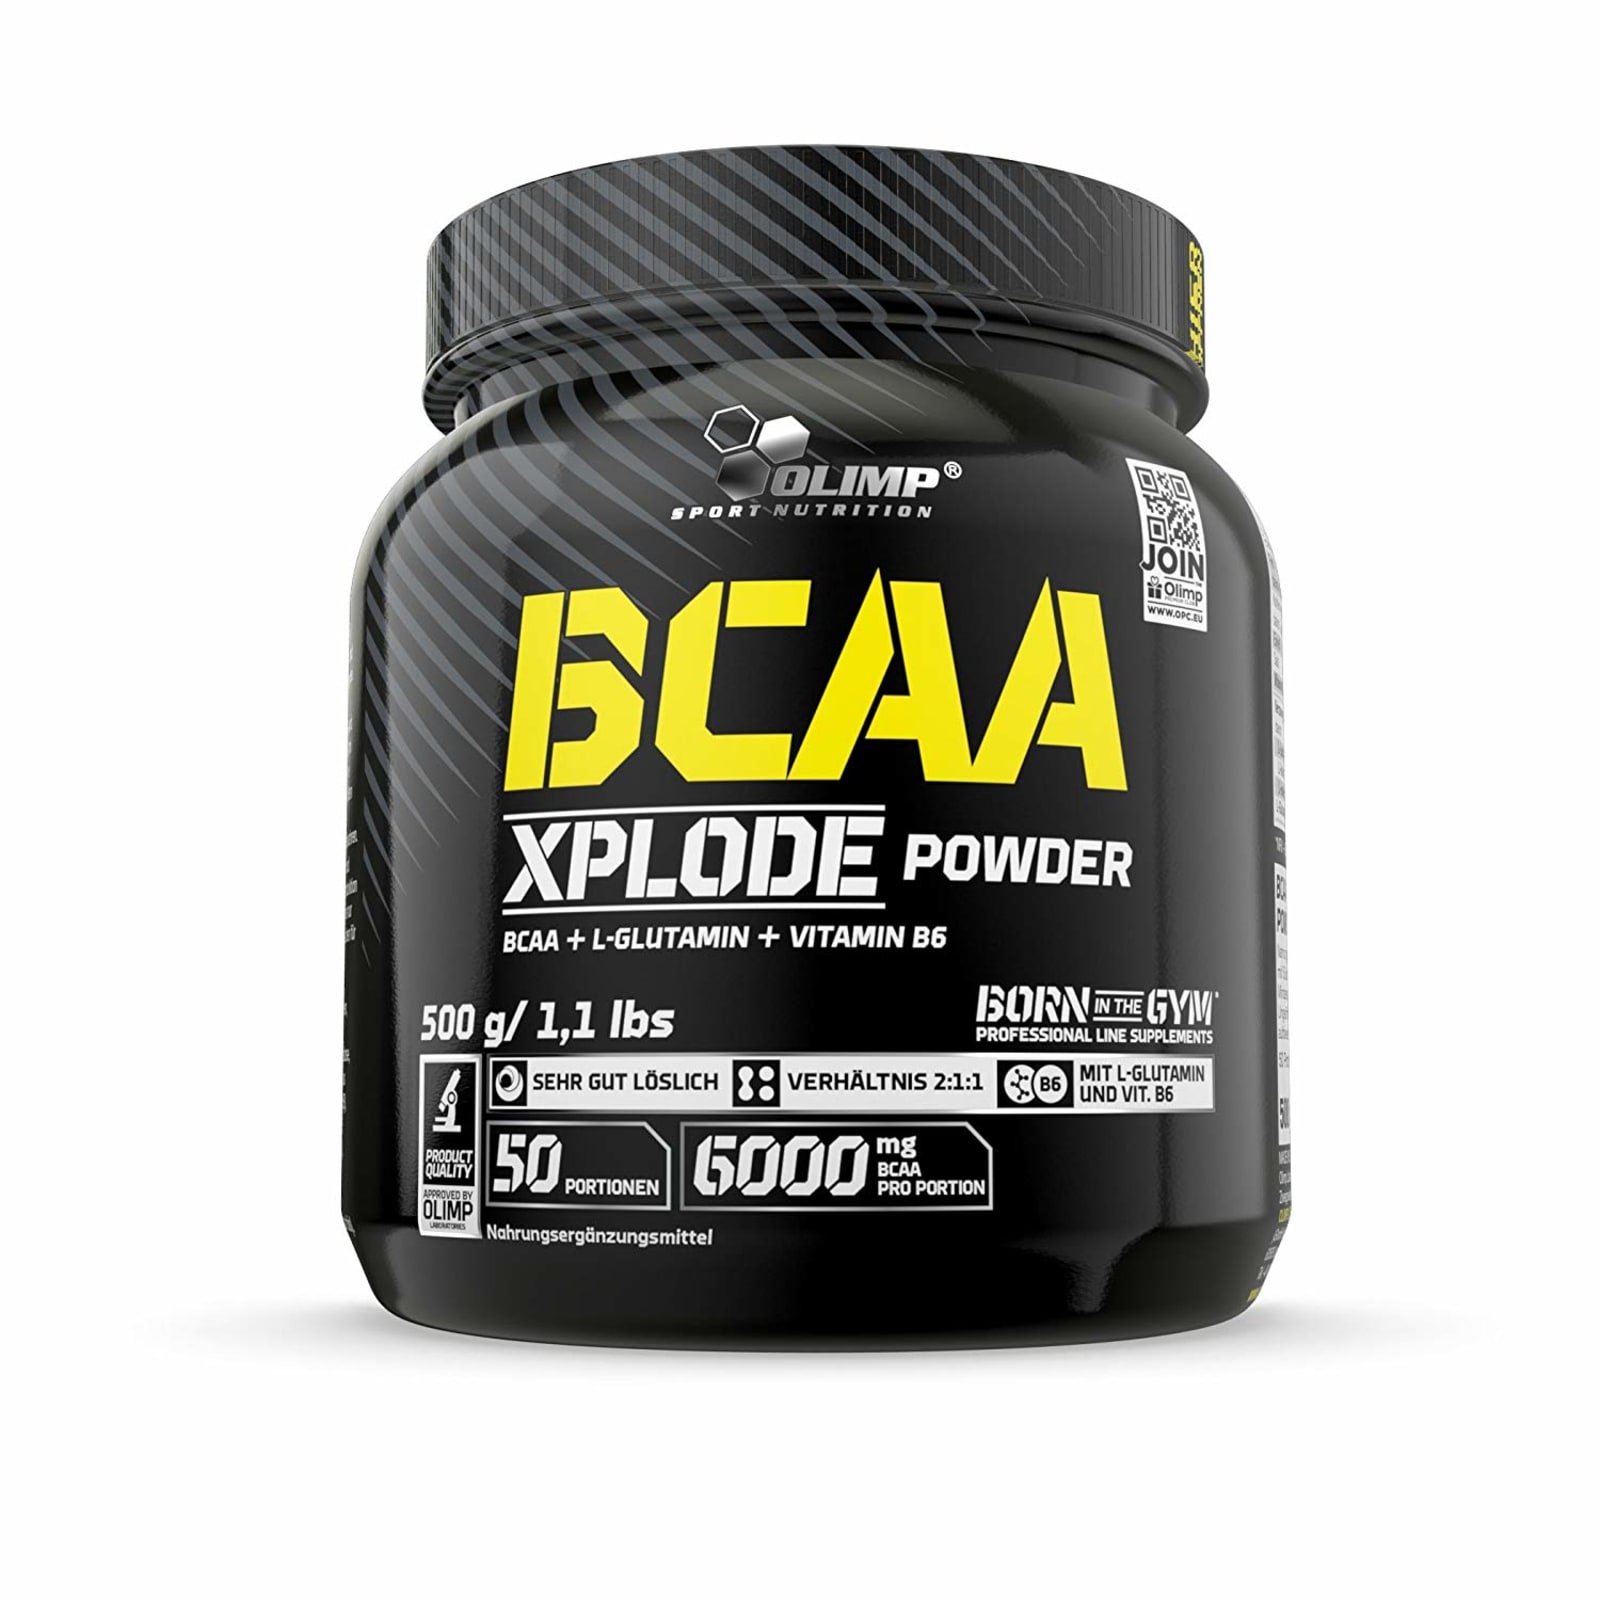 vermomming Toestemming Spelling BCAA Xplode Powder (500g) van Olimp kopen | Bodylab Shop